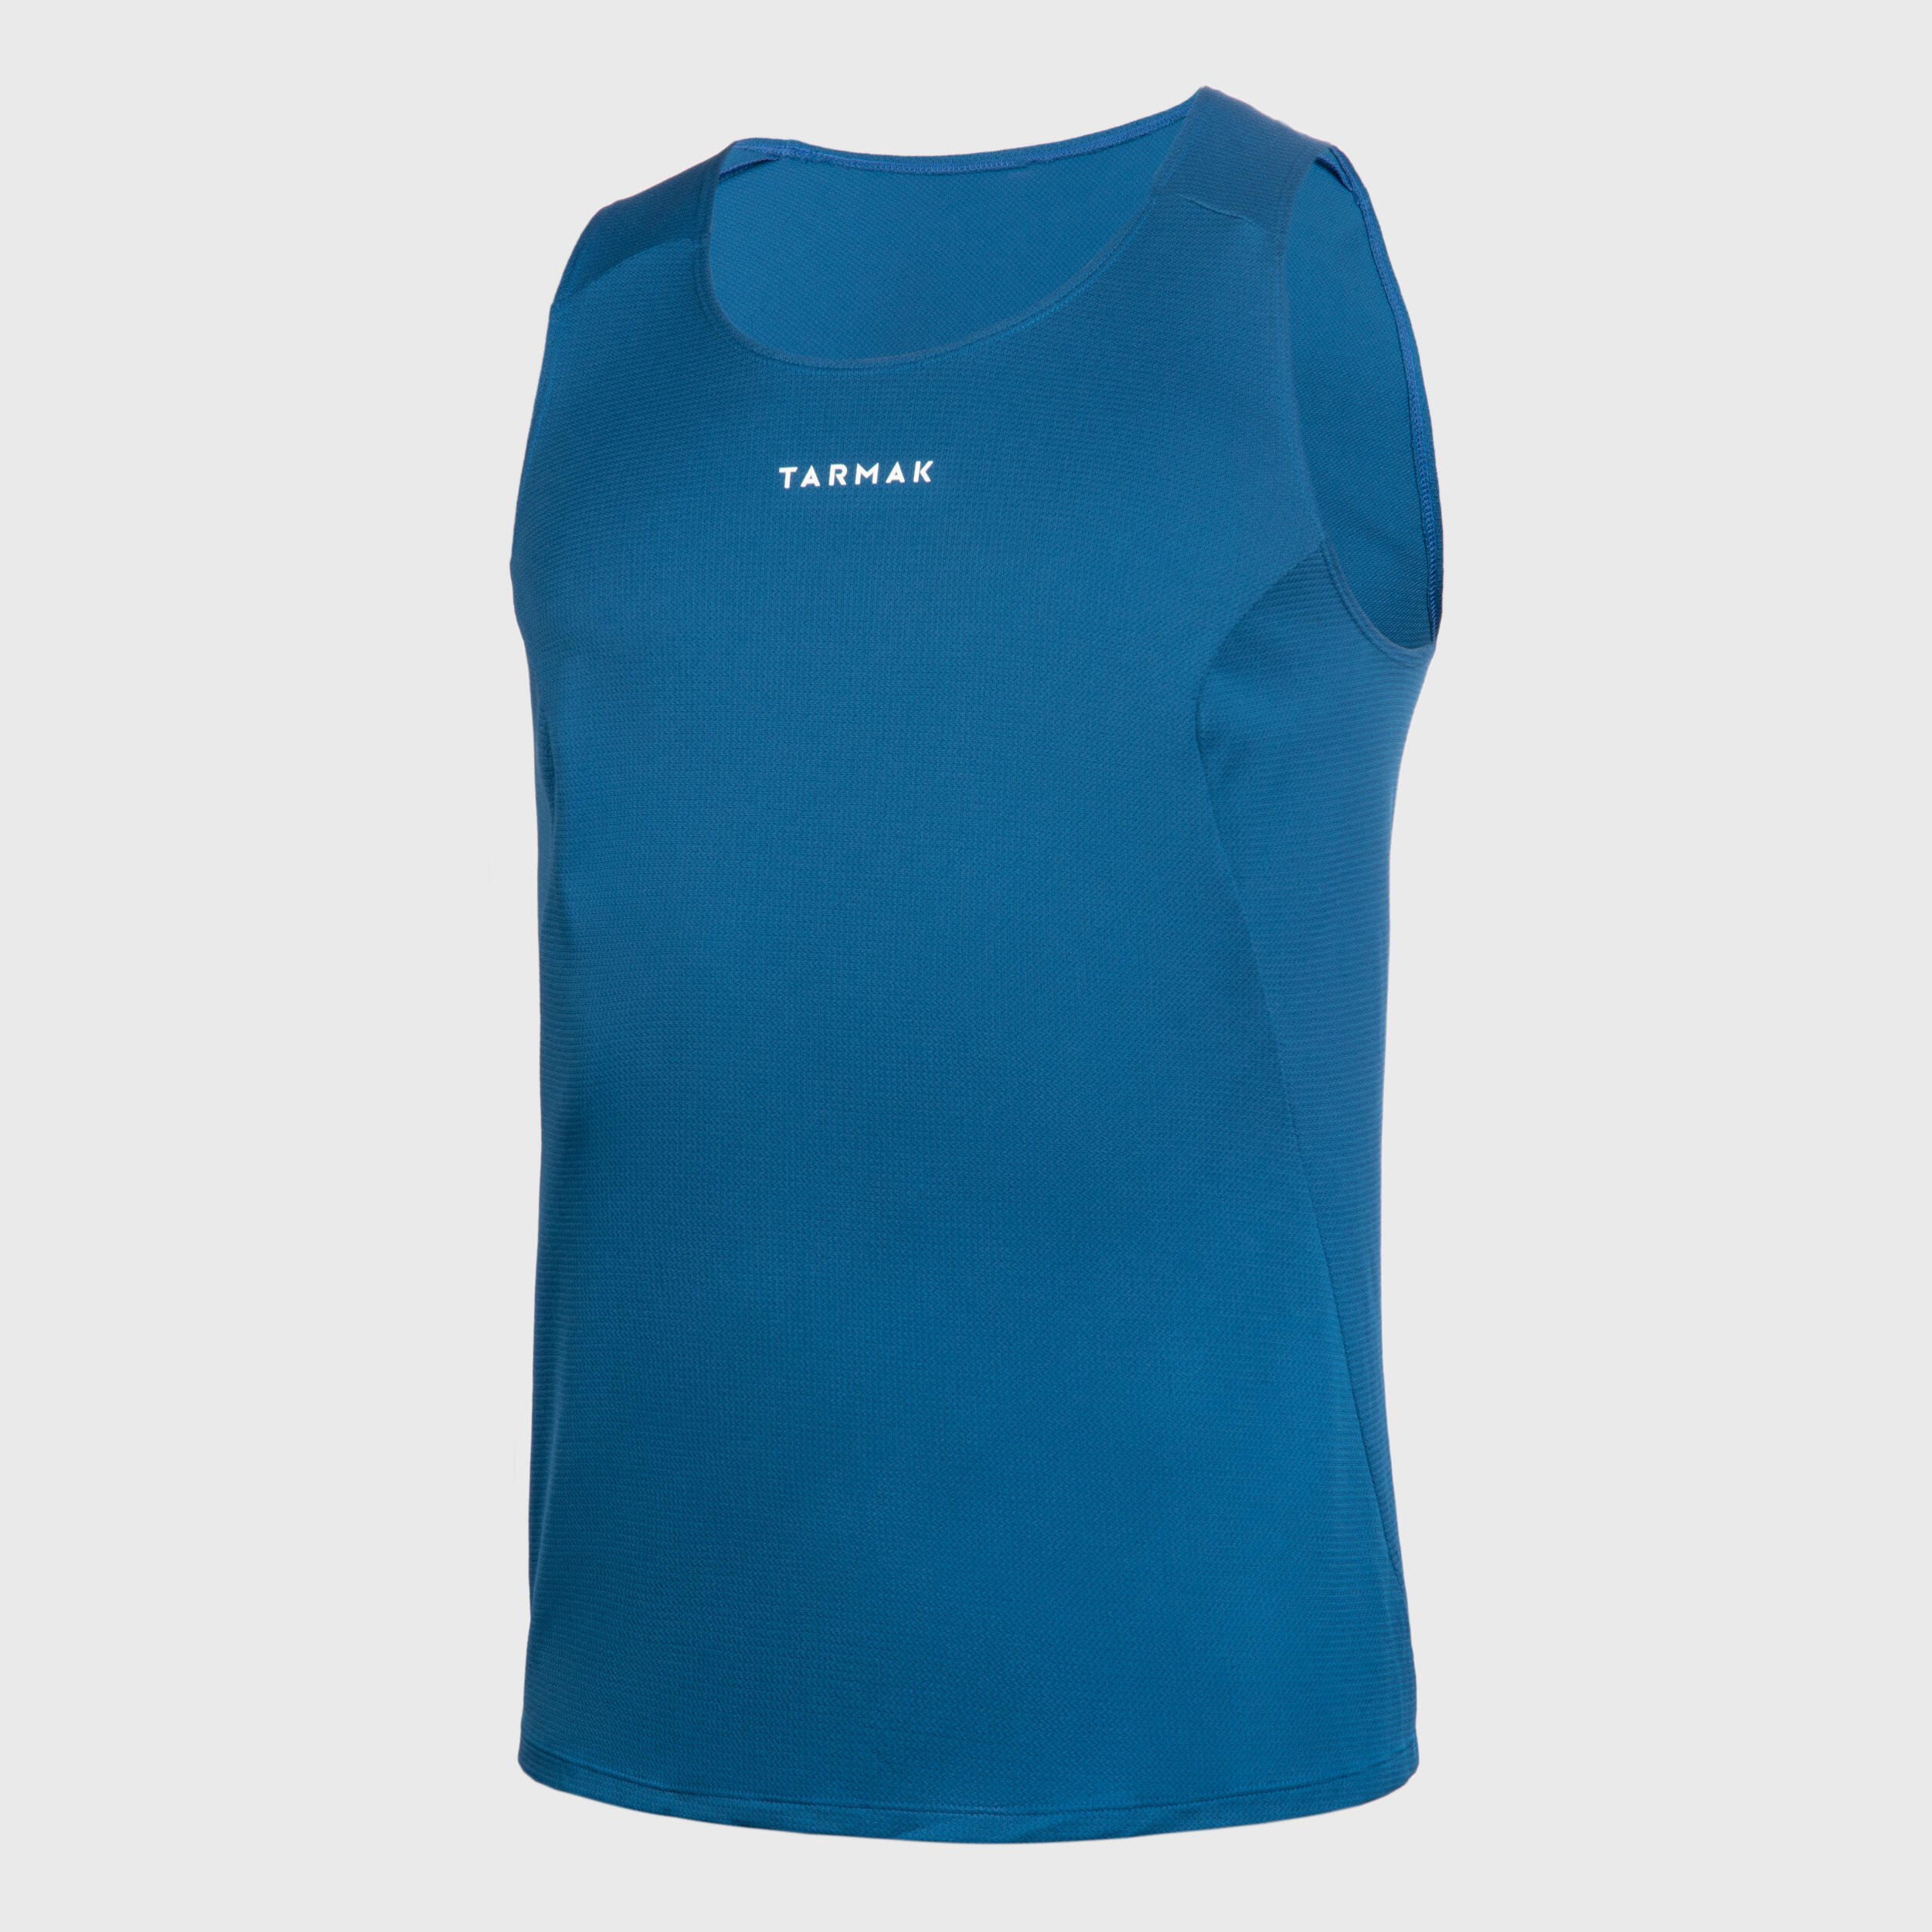 Camisole de basketball – T 100 bleu - TARMAK